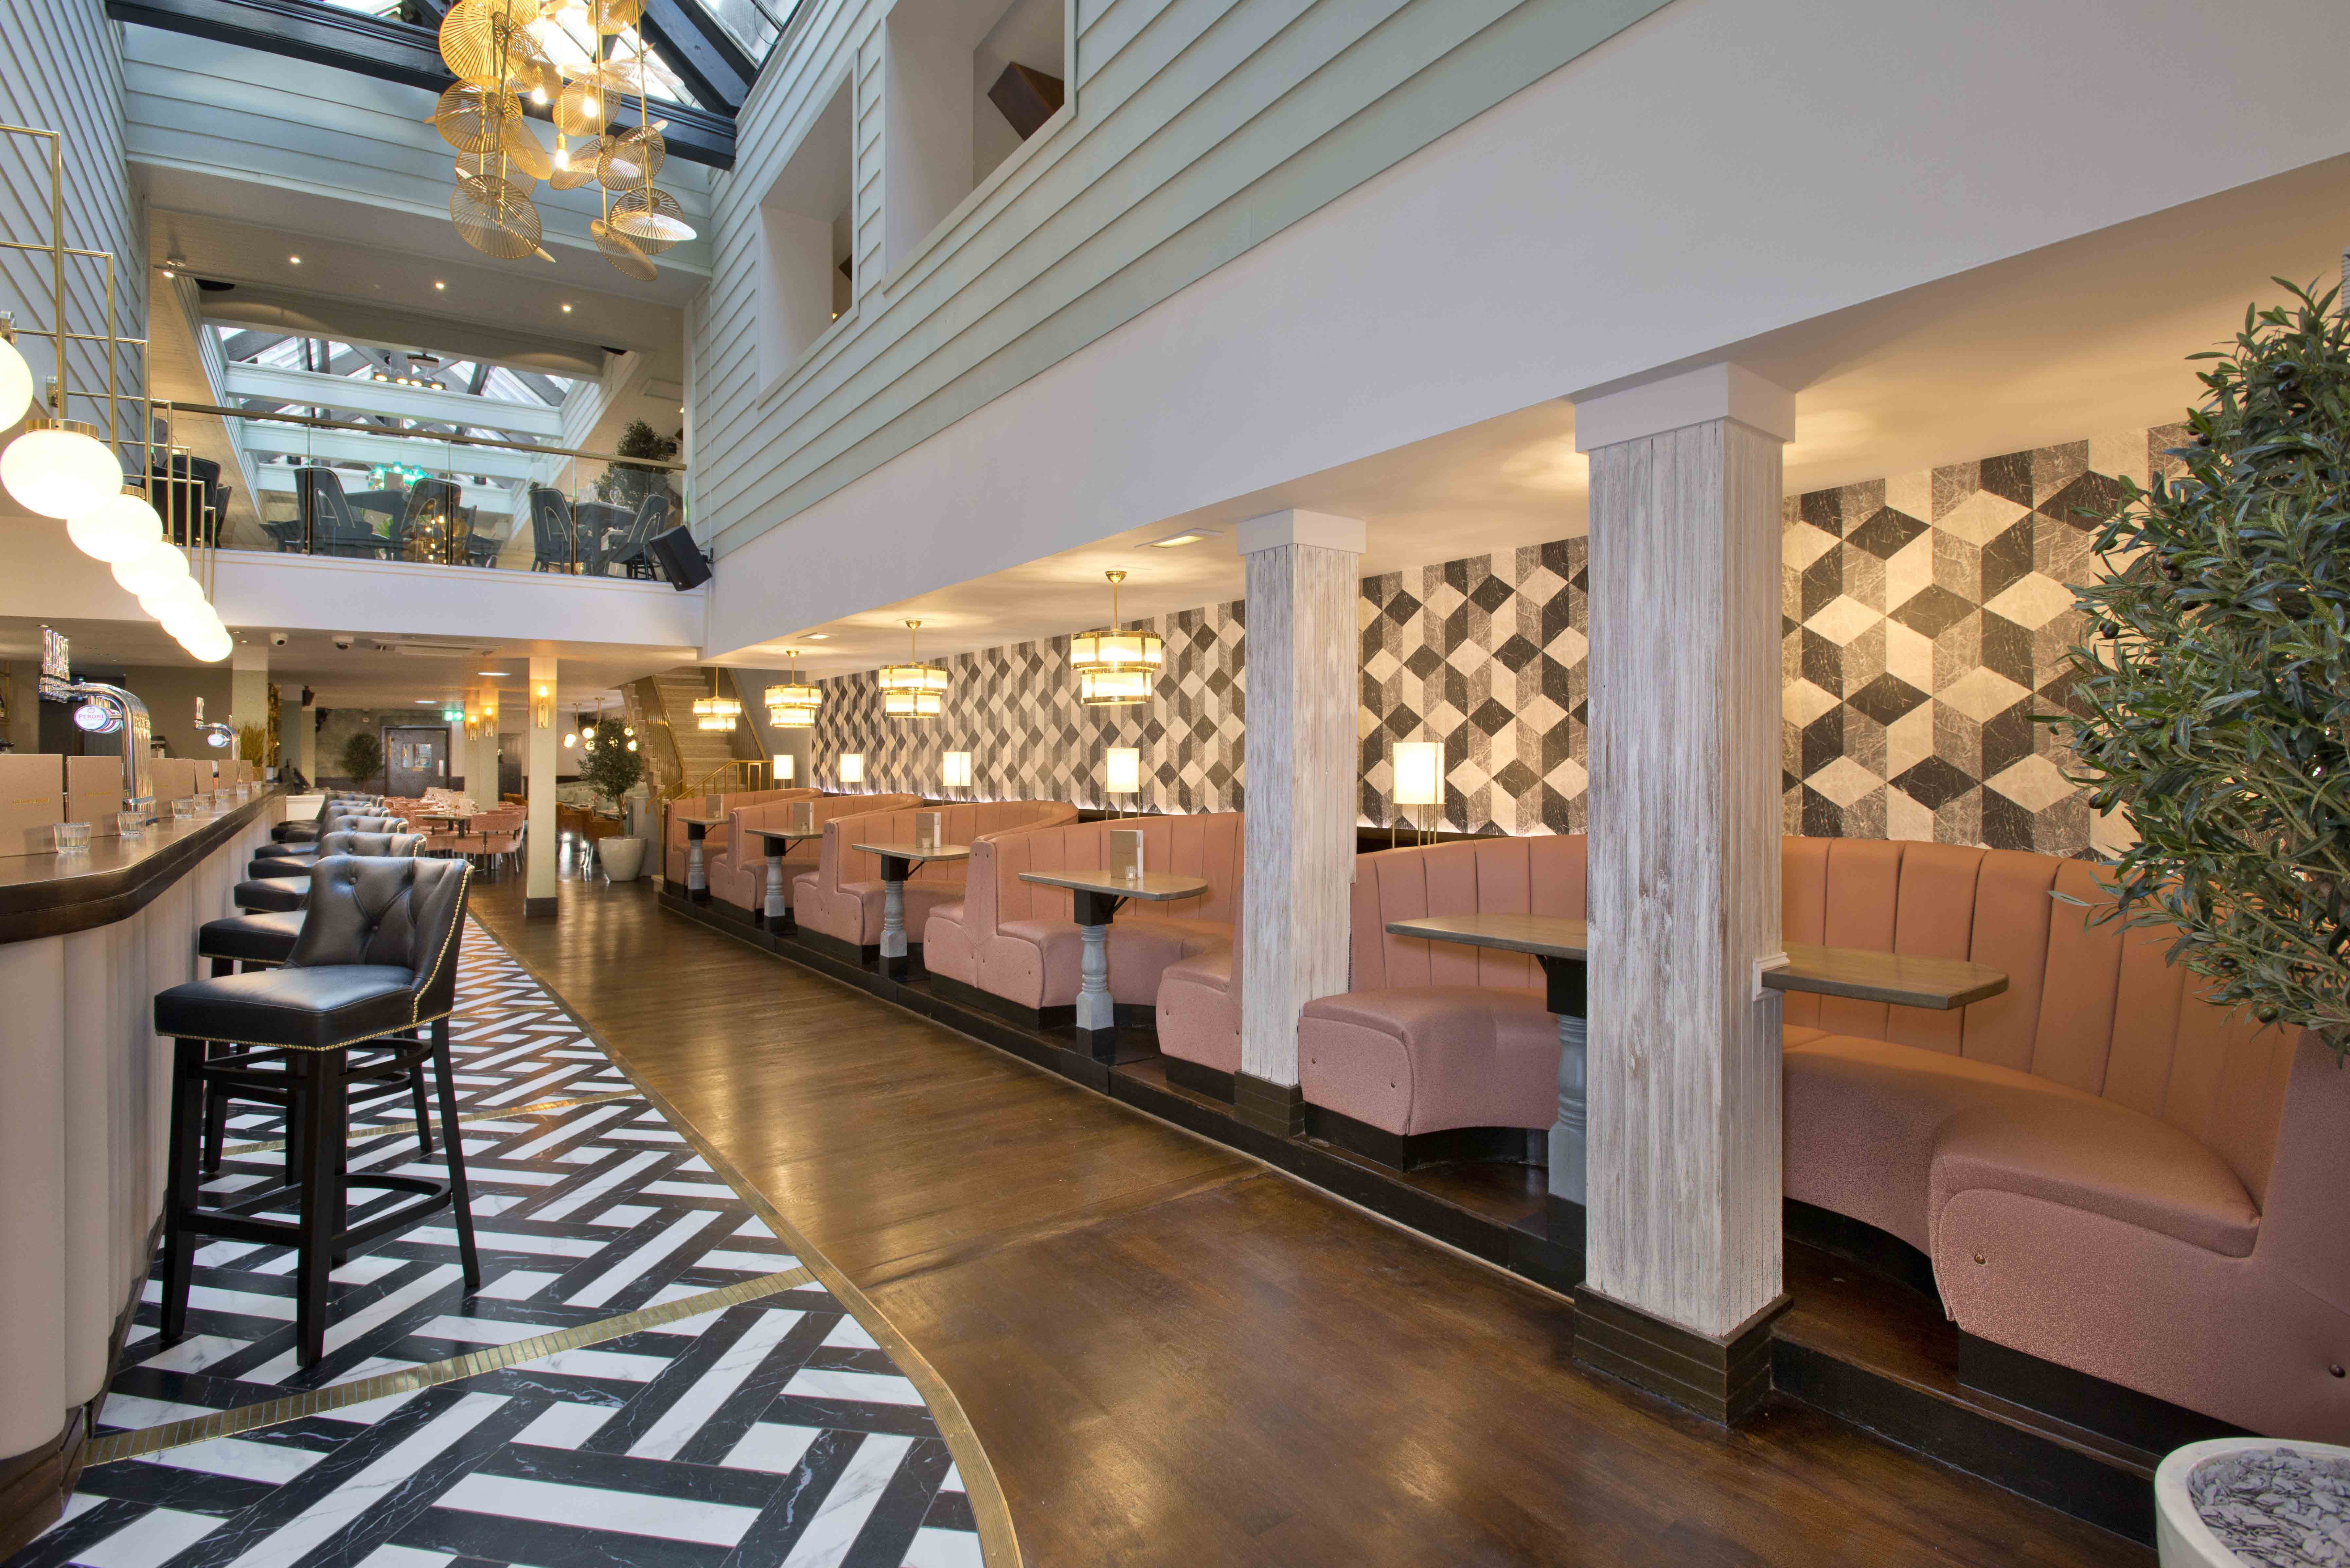 Fusion by Design's interior design scheme for Manchester based restaurant